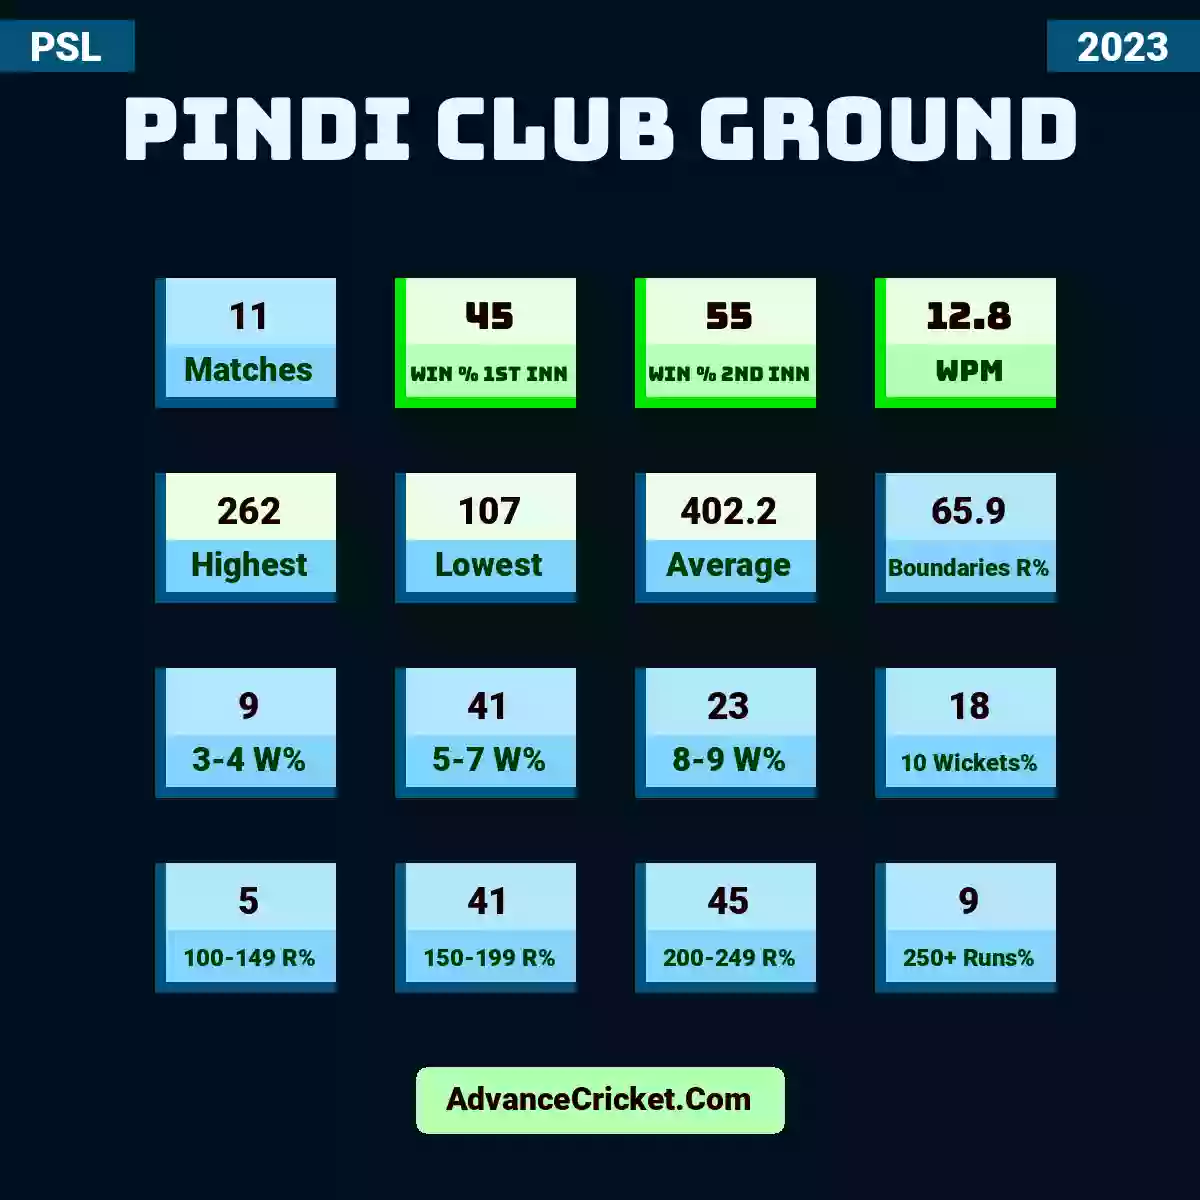 Image showing Pindi Club Ground with Matches: 11, Win % 1st Inn: 45, Win % 2nd Inn: 55, WPM: 12.8, Highest: 262, Lowest: 107, Average: 402.2, Boundaries R%: 65.9, 3-4 W%: 9, 5-7 W%: 41, 8-9 W%: 23, 10 Wickets%: 18, 100-149 R%: 5, 150-199 R%: 41, 200-249 R%: 45, 250+ Runs%: 9.